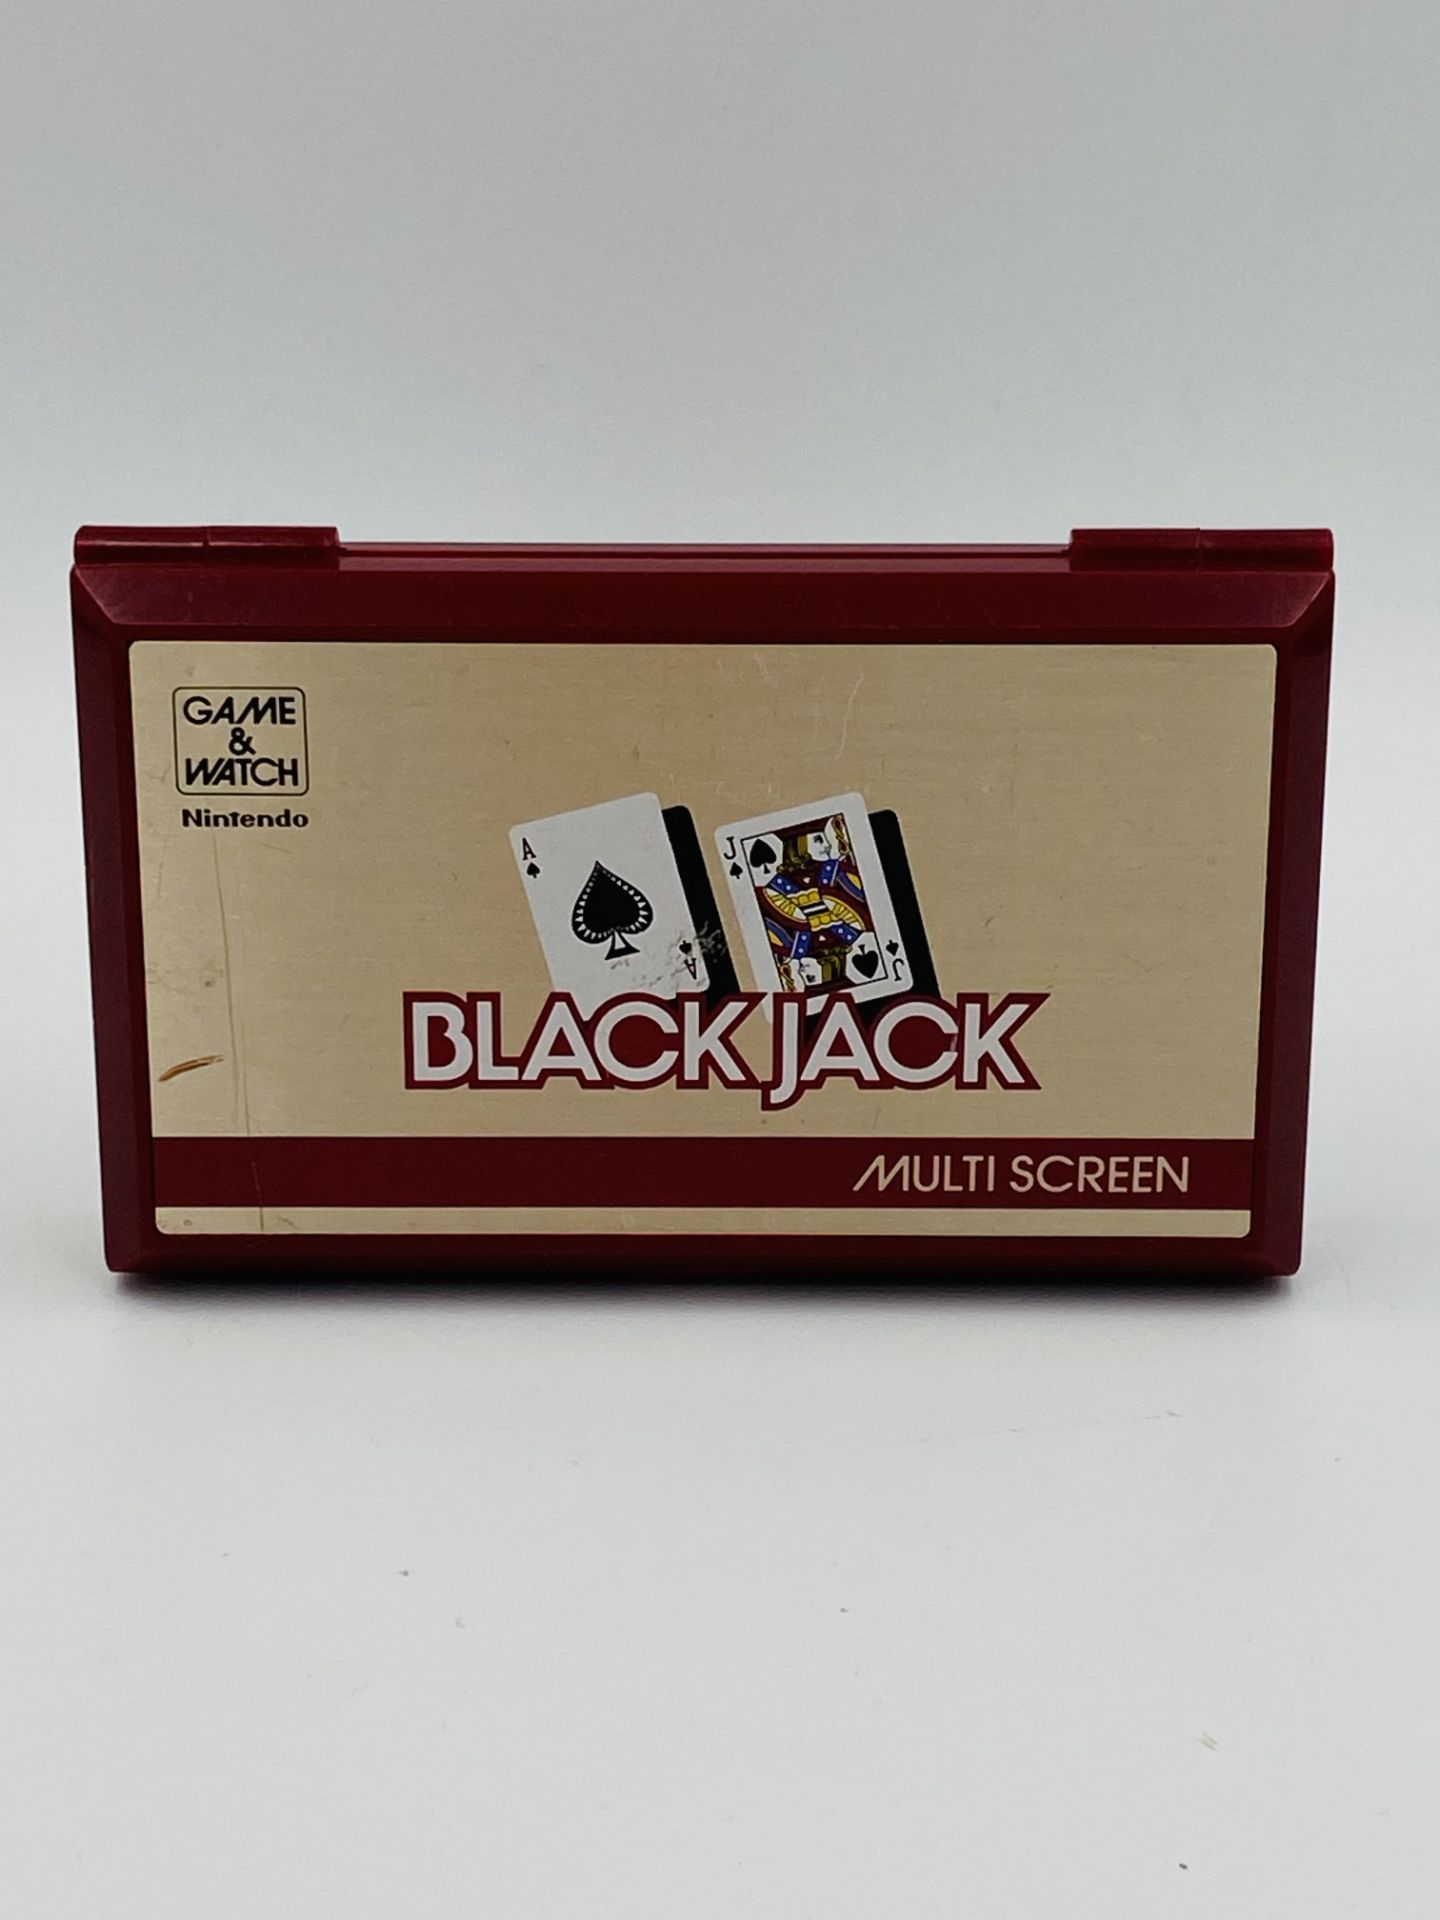 Nintendo Game & Watch Blackjack, model BJ-60